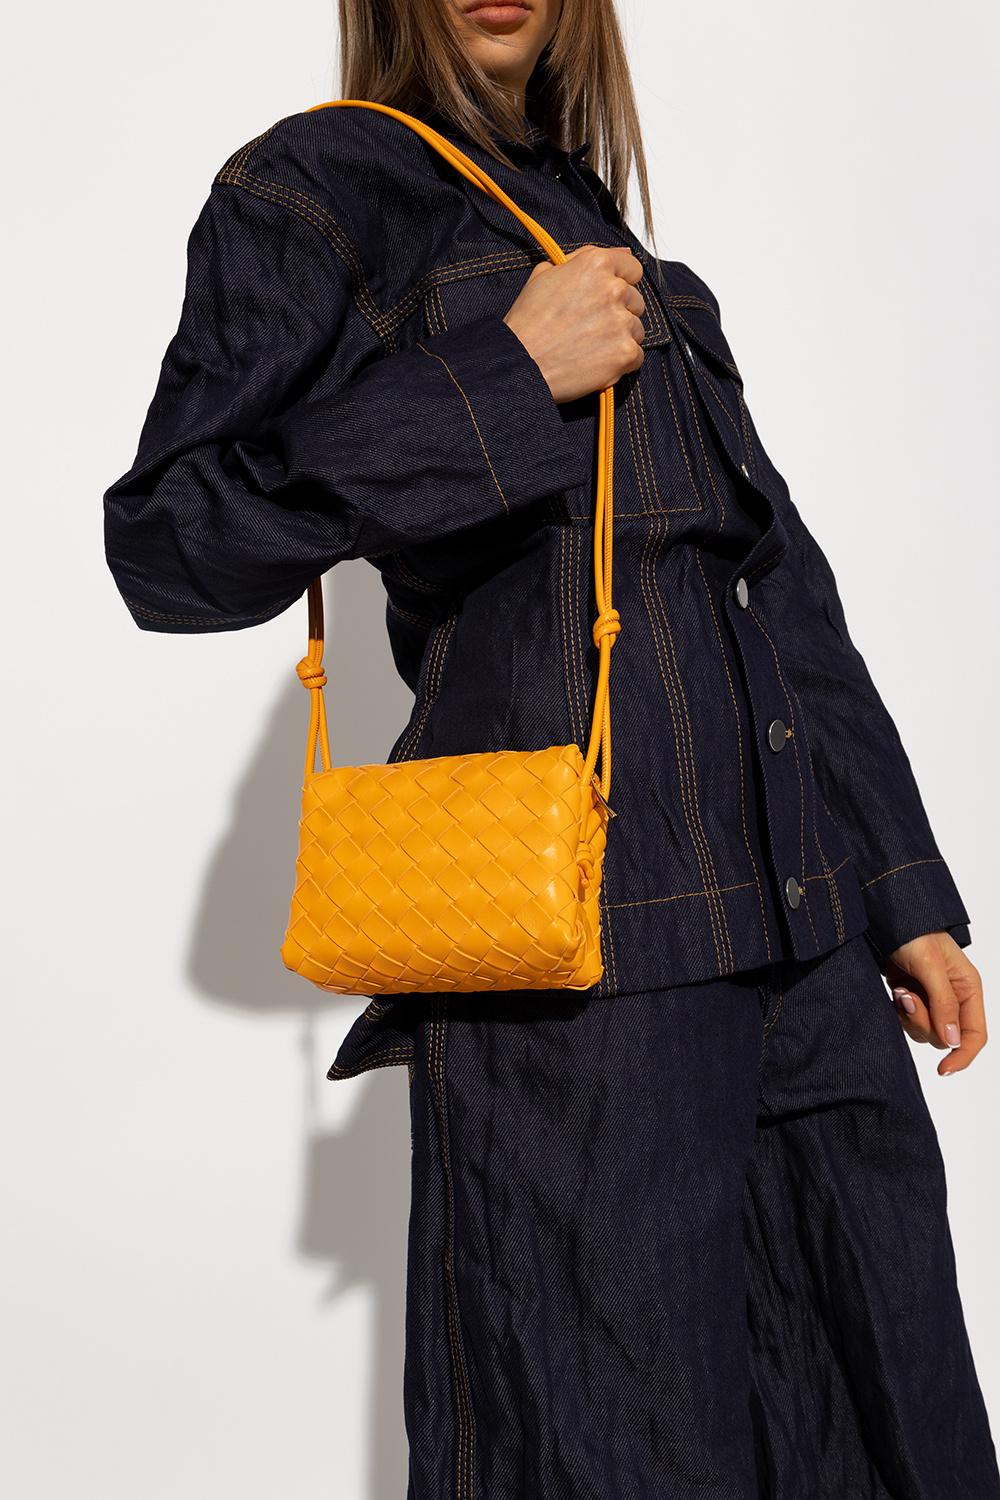 Bottega Veneta 'loop Mini' Shoulder Bag in Orange